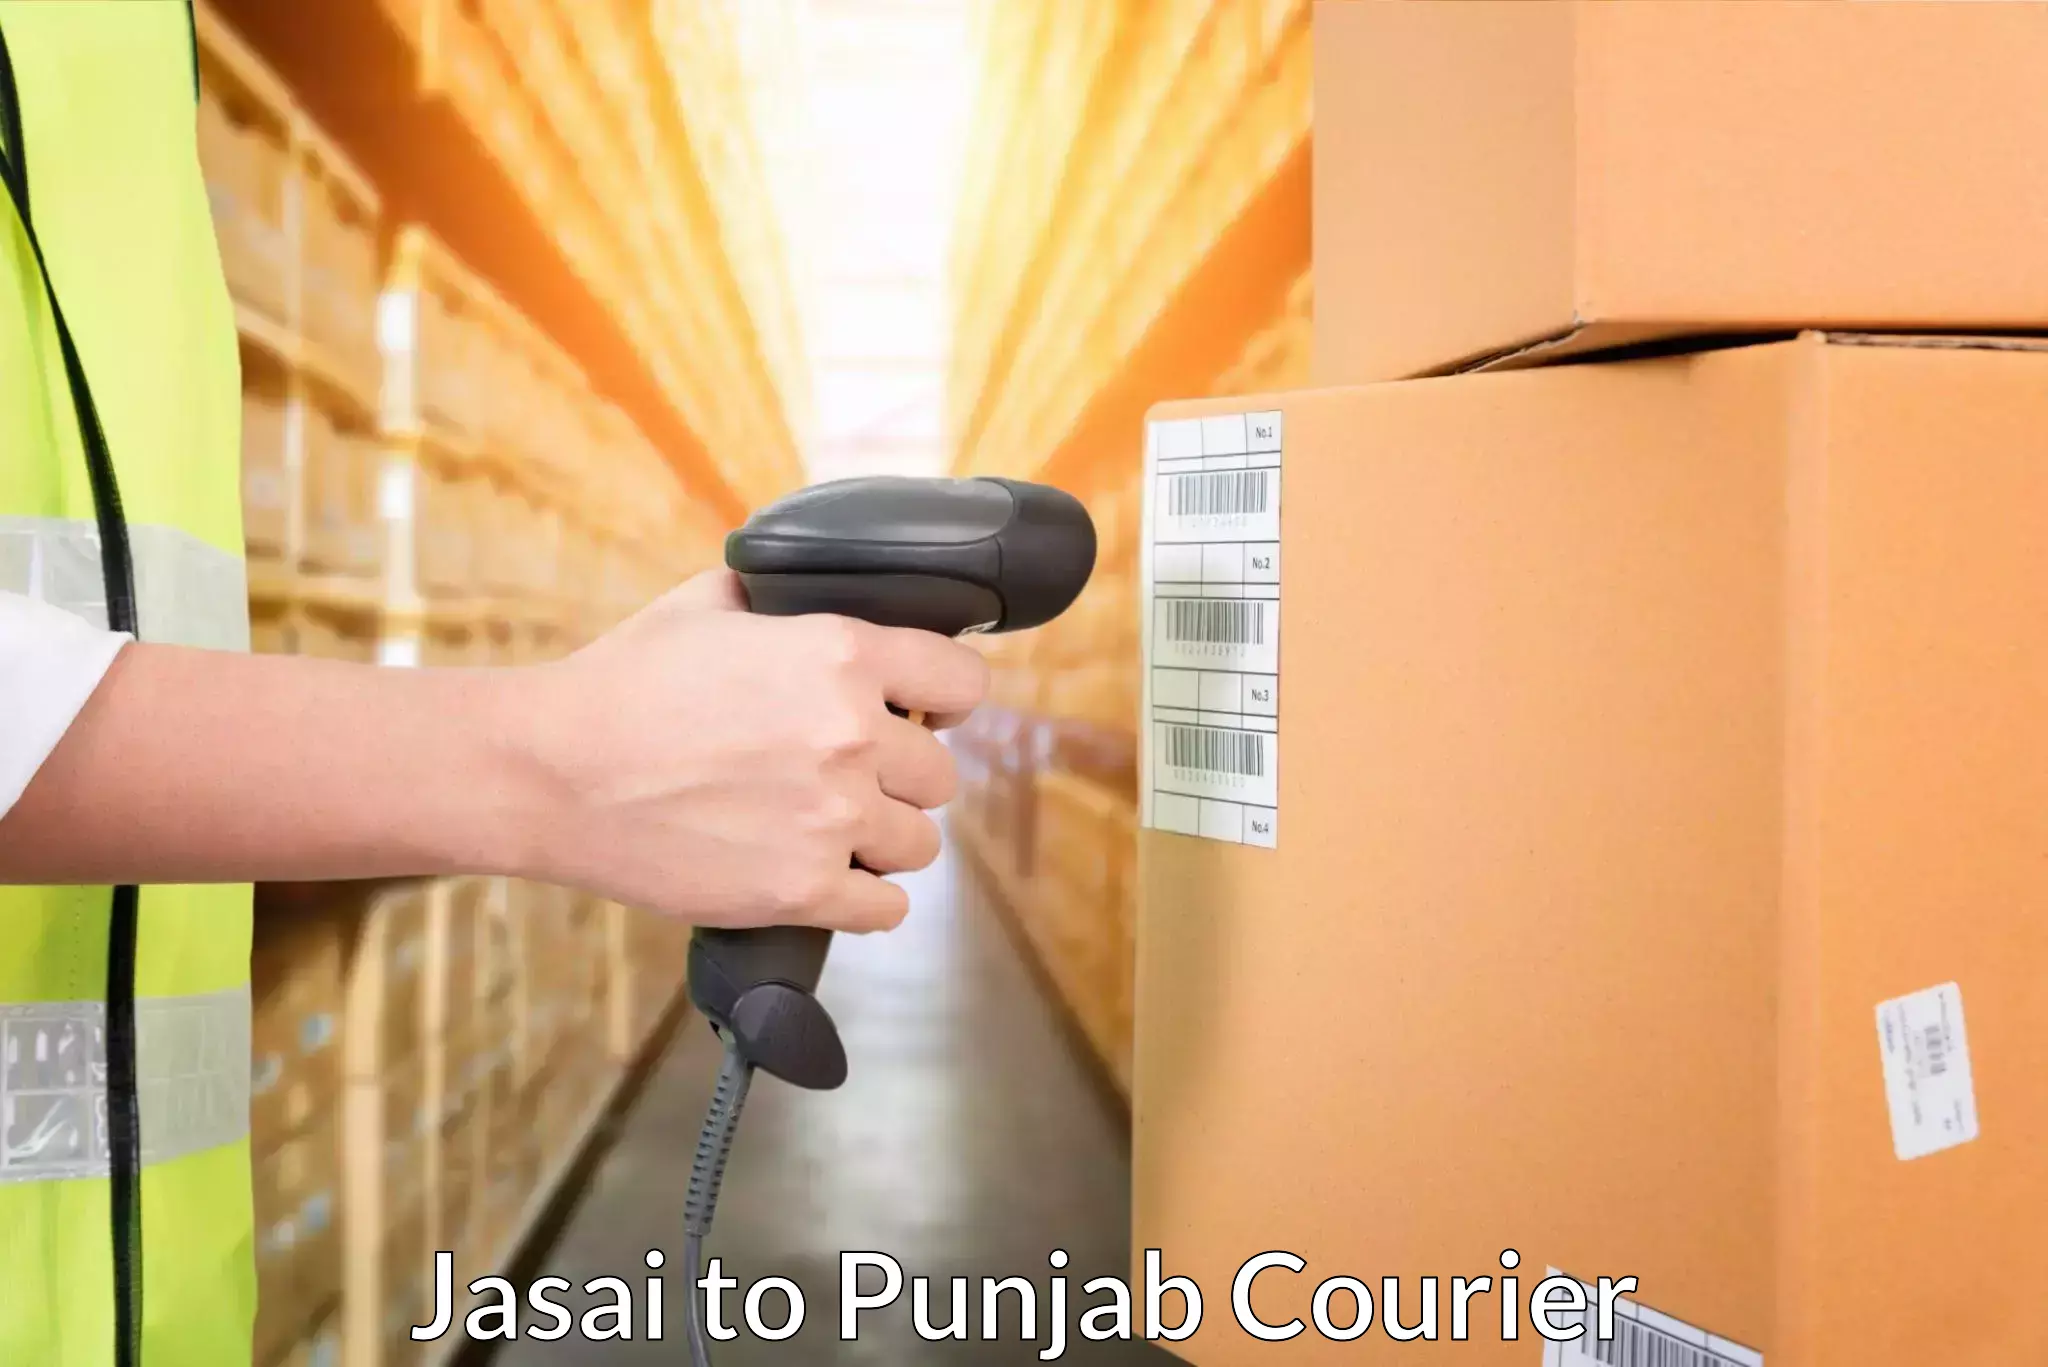 Courier service comparison Jasai to Zirakpur